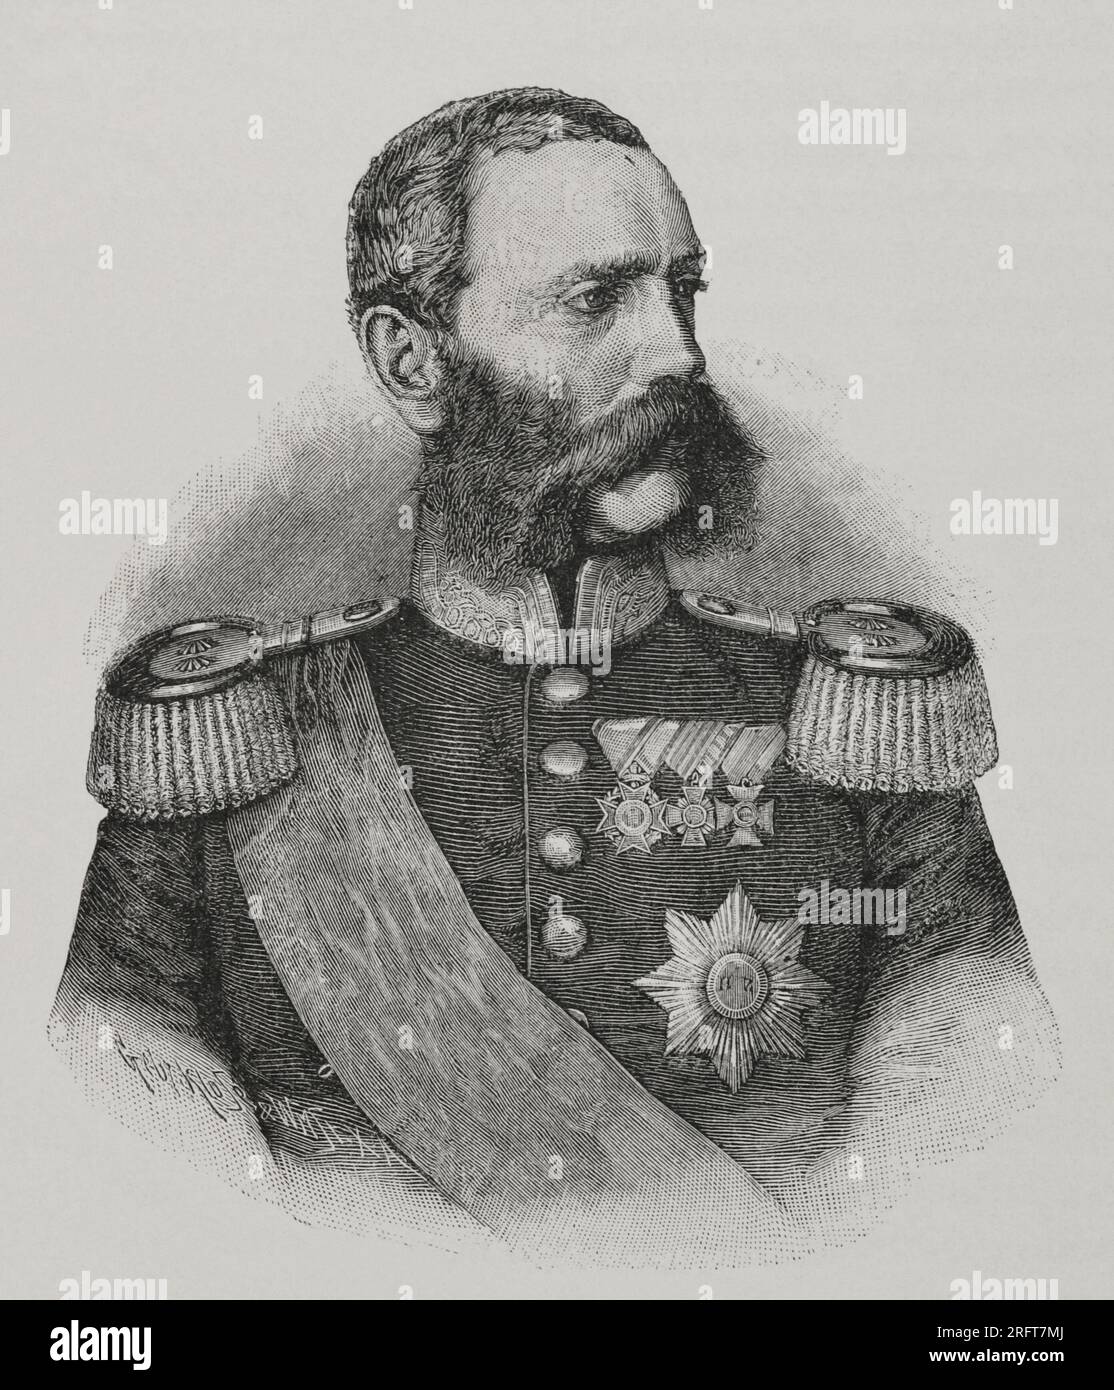 Albert of Saxony (1828-1875). Crown Prince. King of Saxony (1873-1902). Portrait. Engraving. 'Historia de la Guerra Franco-Alemana de 1870-1871'. Published in Barcelona, 1891. Stock Photo